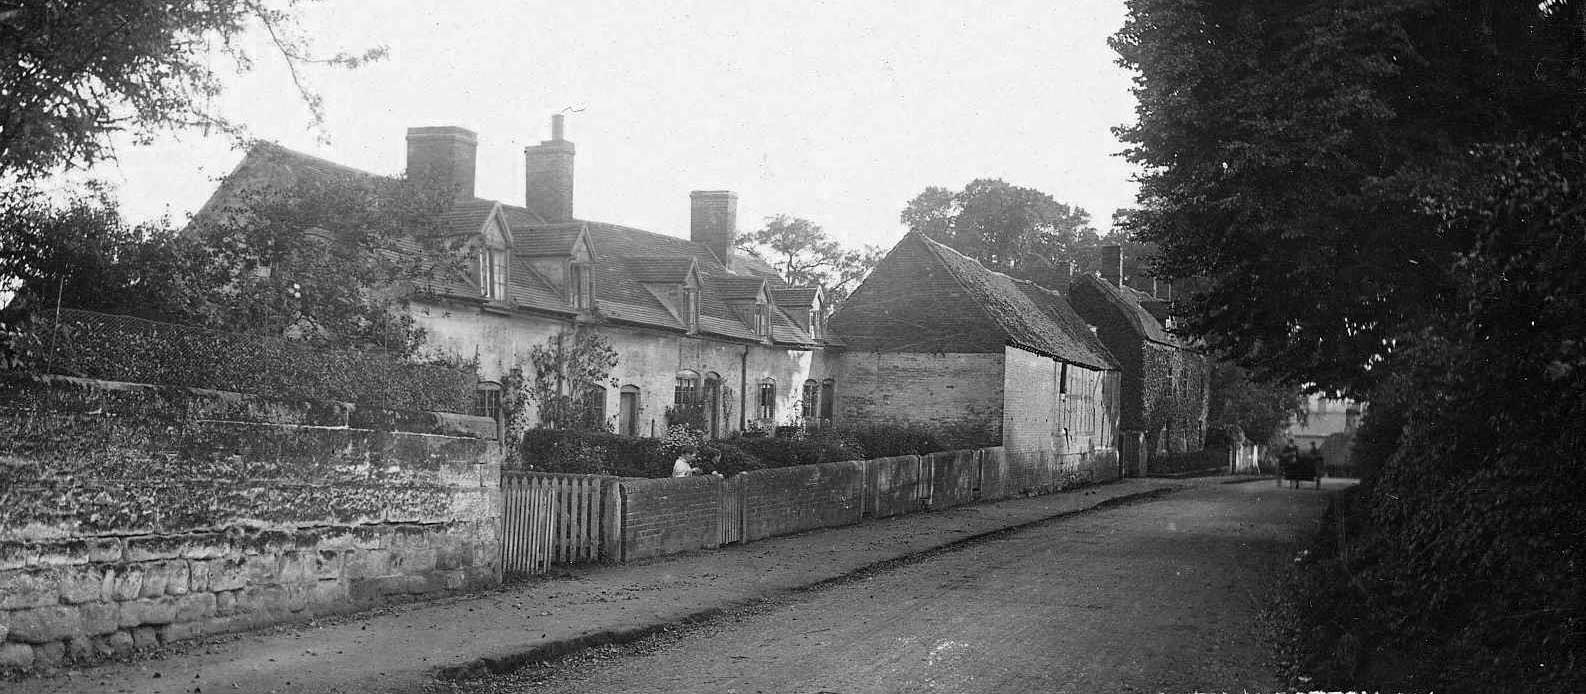 Elms Farm Cottages (demolished)